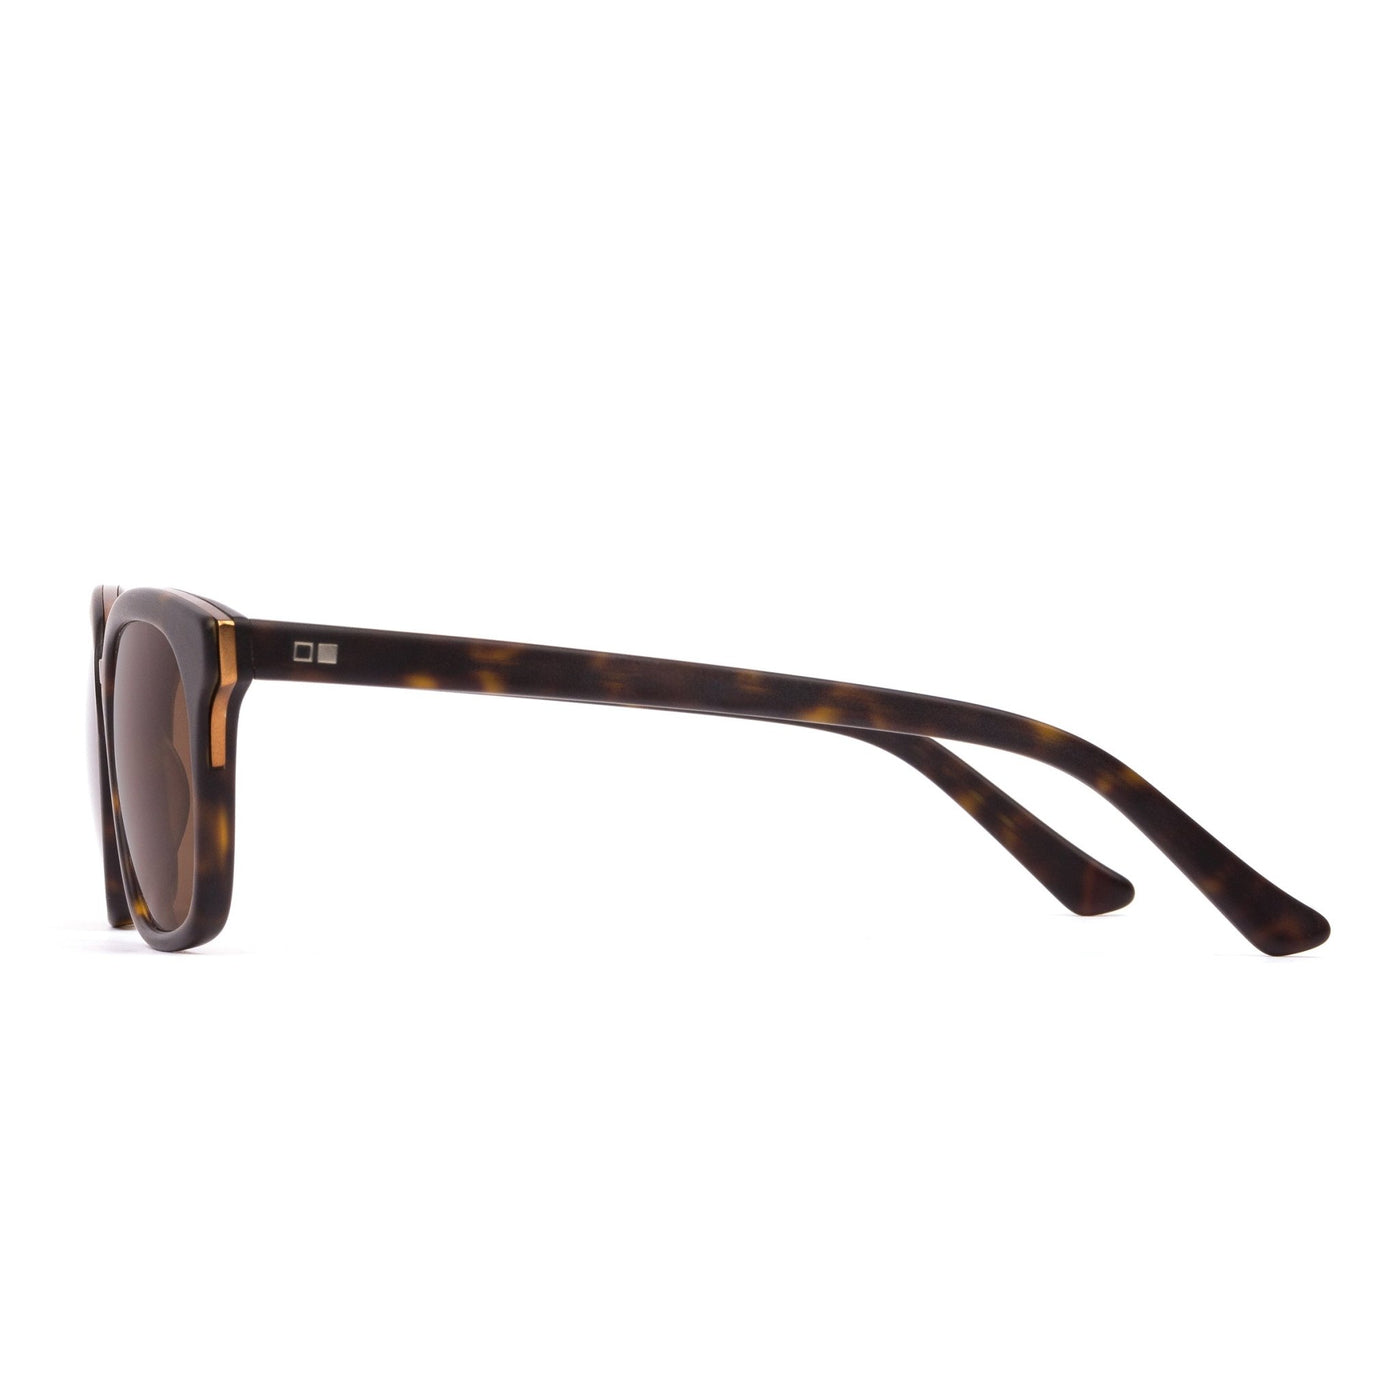 Brown Tortoise OTIS eyewear sunglasses from the side